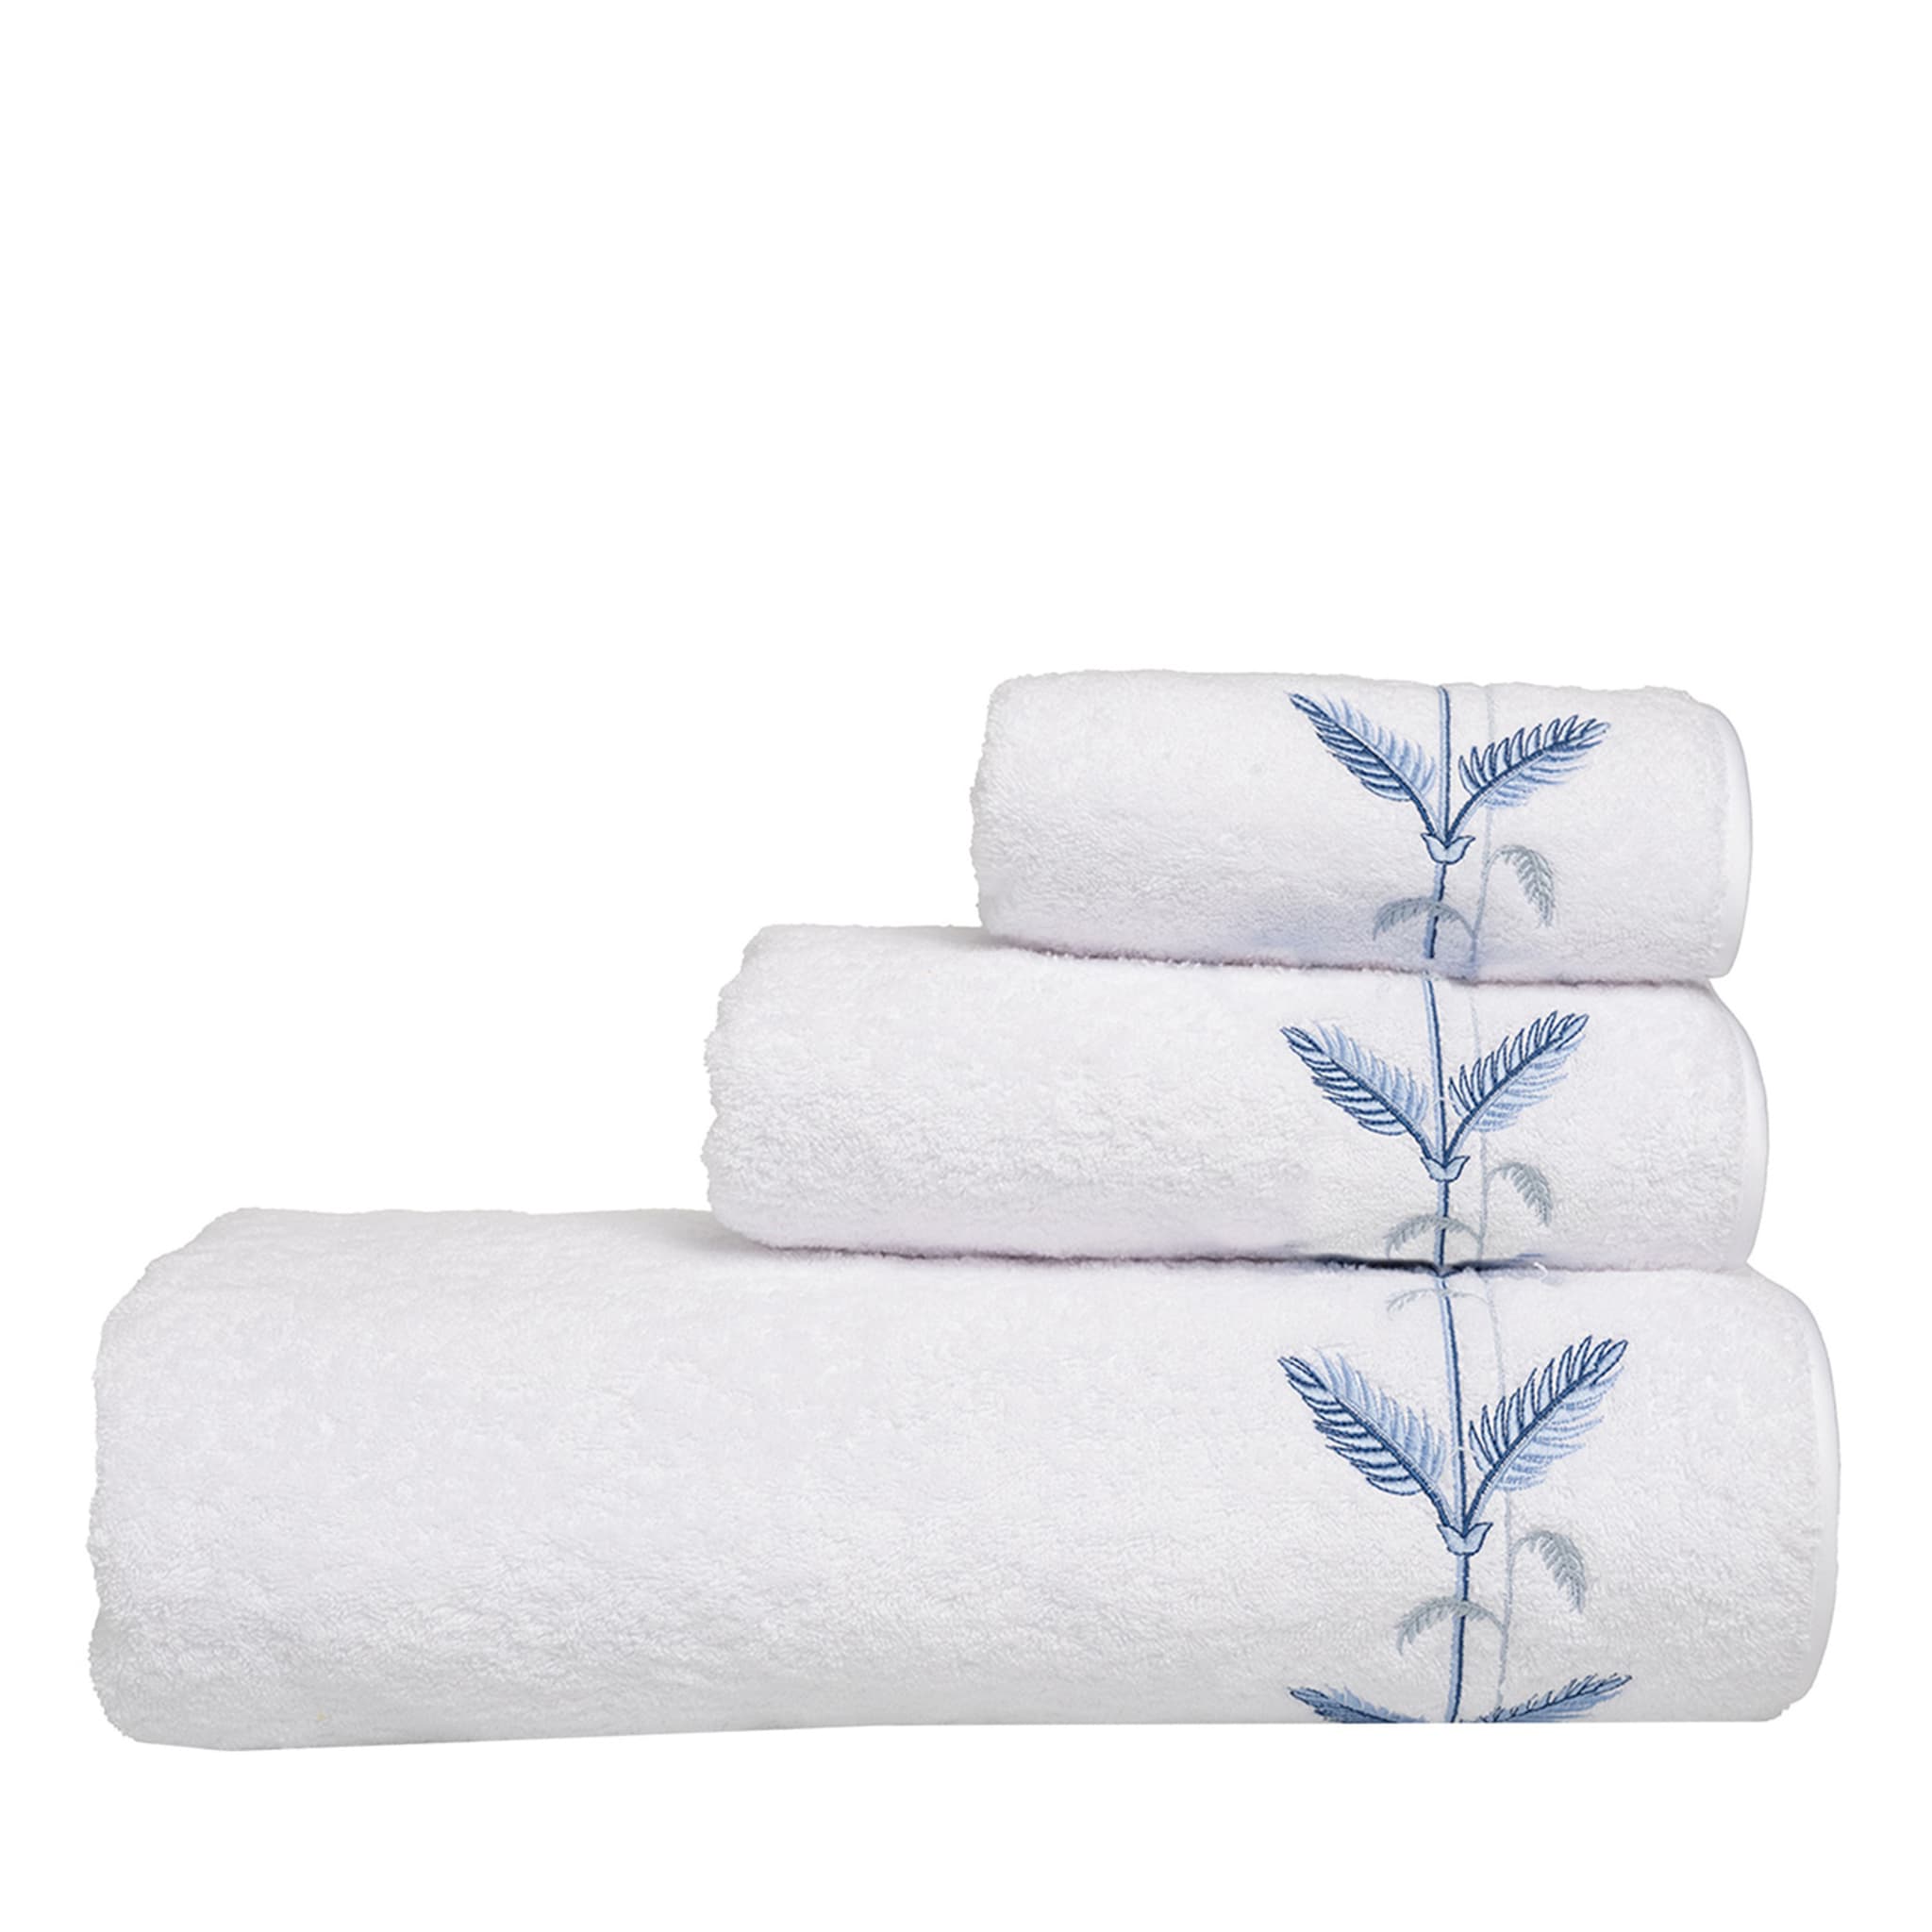 Plumes Set of 3 Bath Towels - Main view